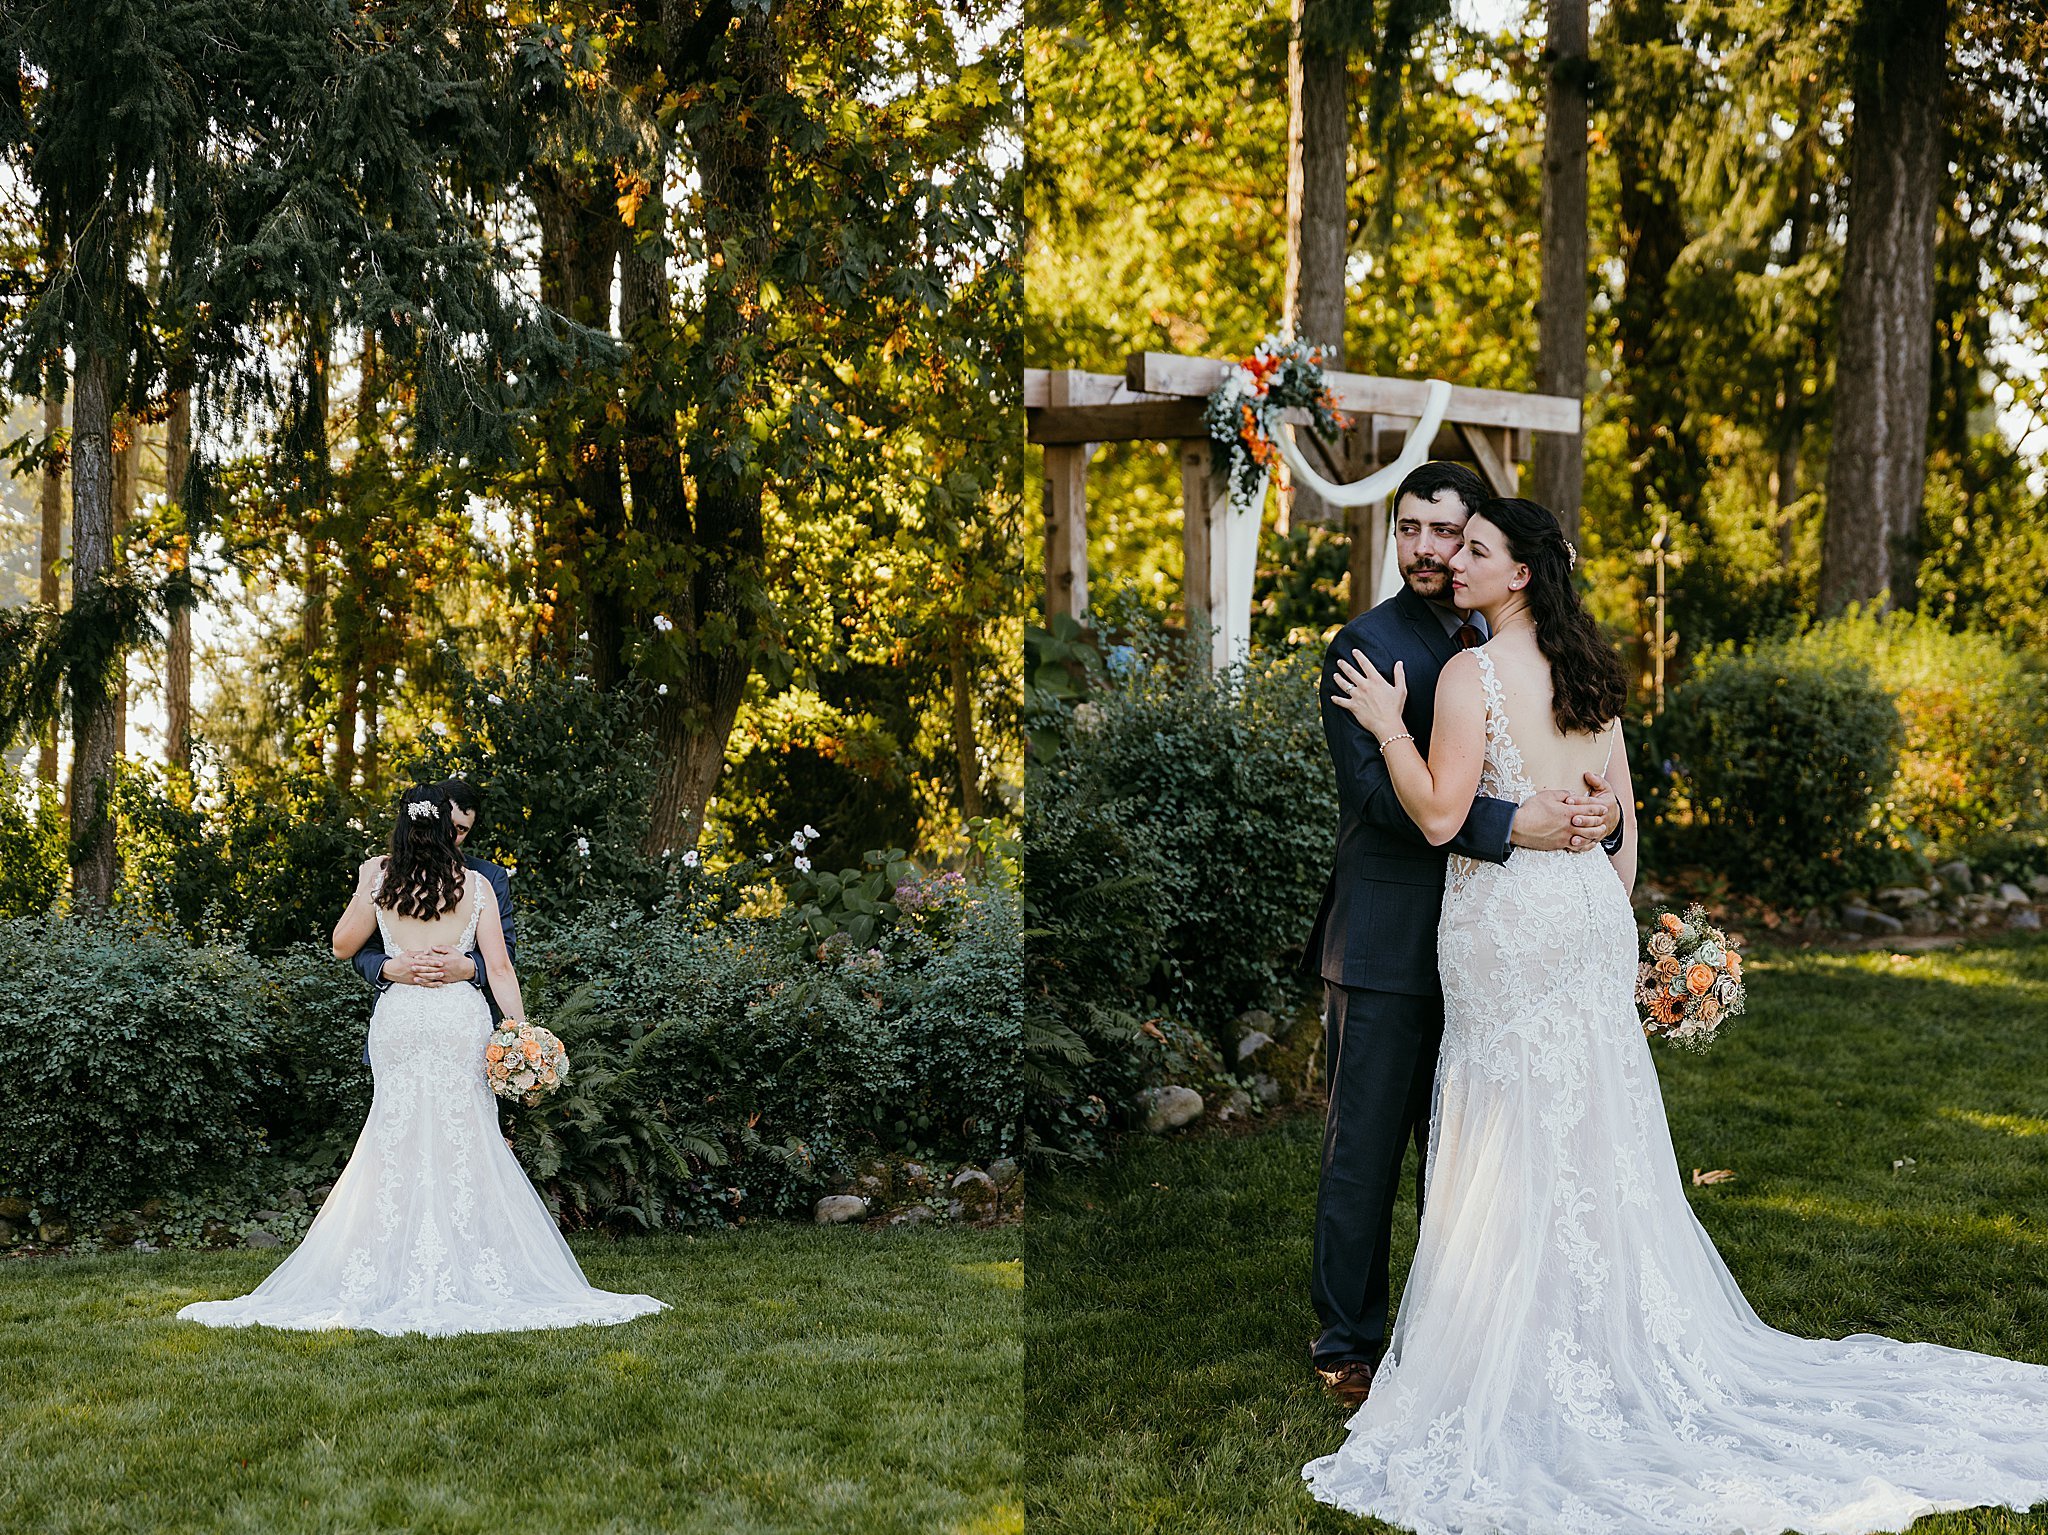 withstylePhotography_Oregon city Photographer_ Portland wedding photographer_Vanderbeck vally farms wedding_Oregon elopment Photographer0043.jpg